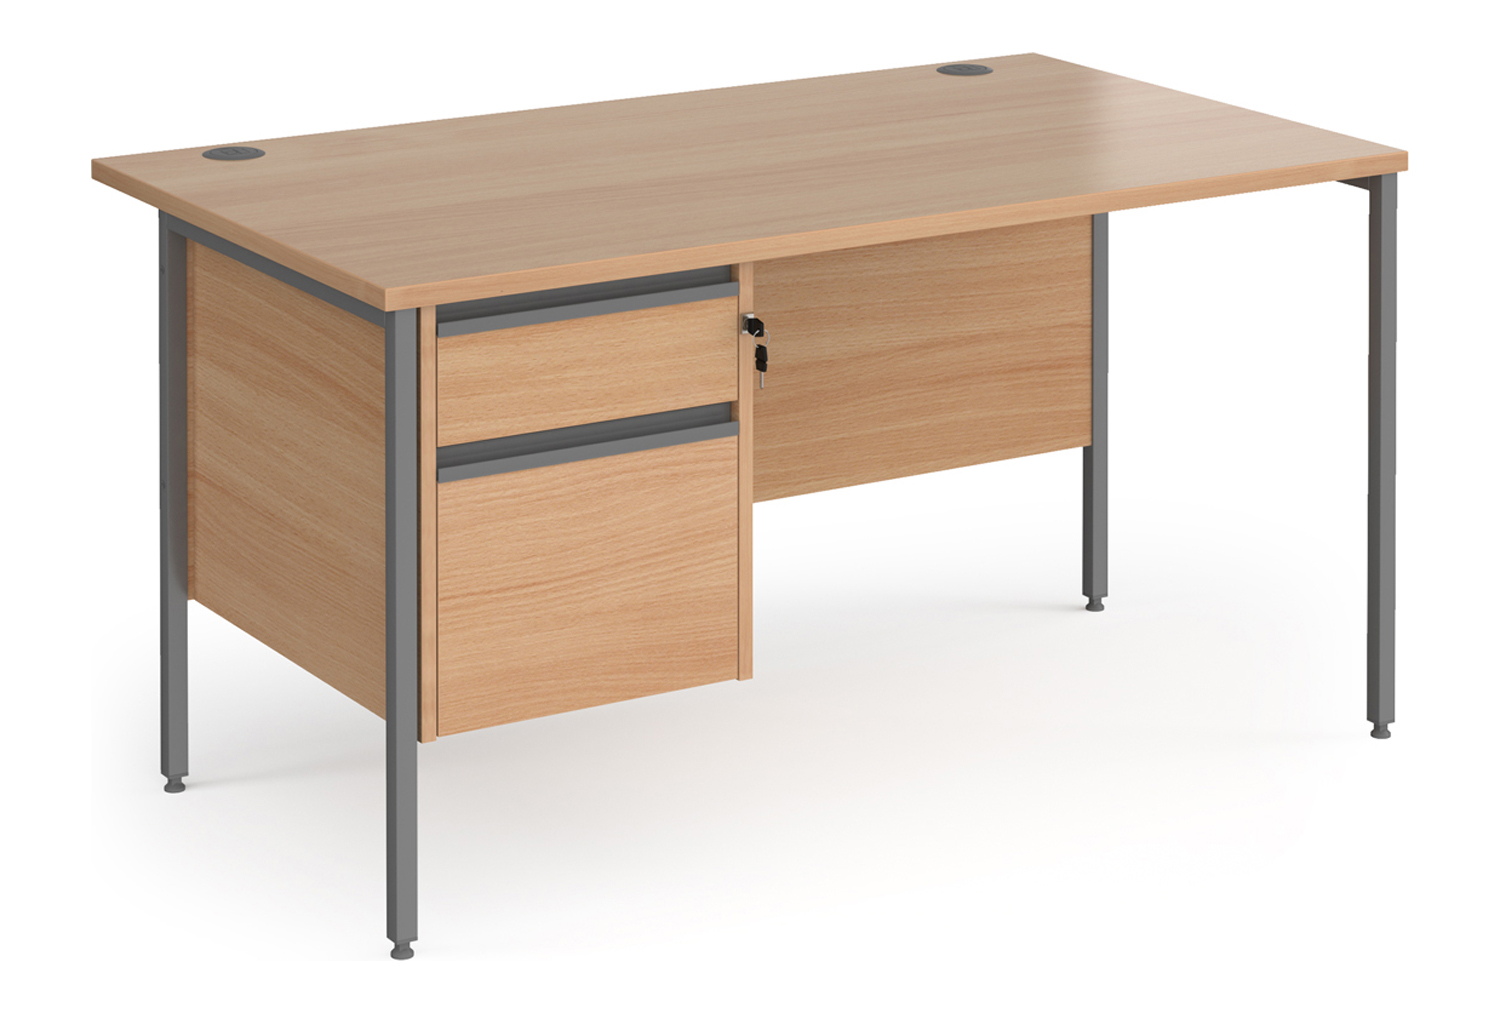 Value Line Classic+ Rectangular H-Leg Office Desk 2 Drawers (Graphite Leg), 140wx80dx73h (cm), Beech, Express Delivery